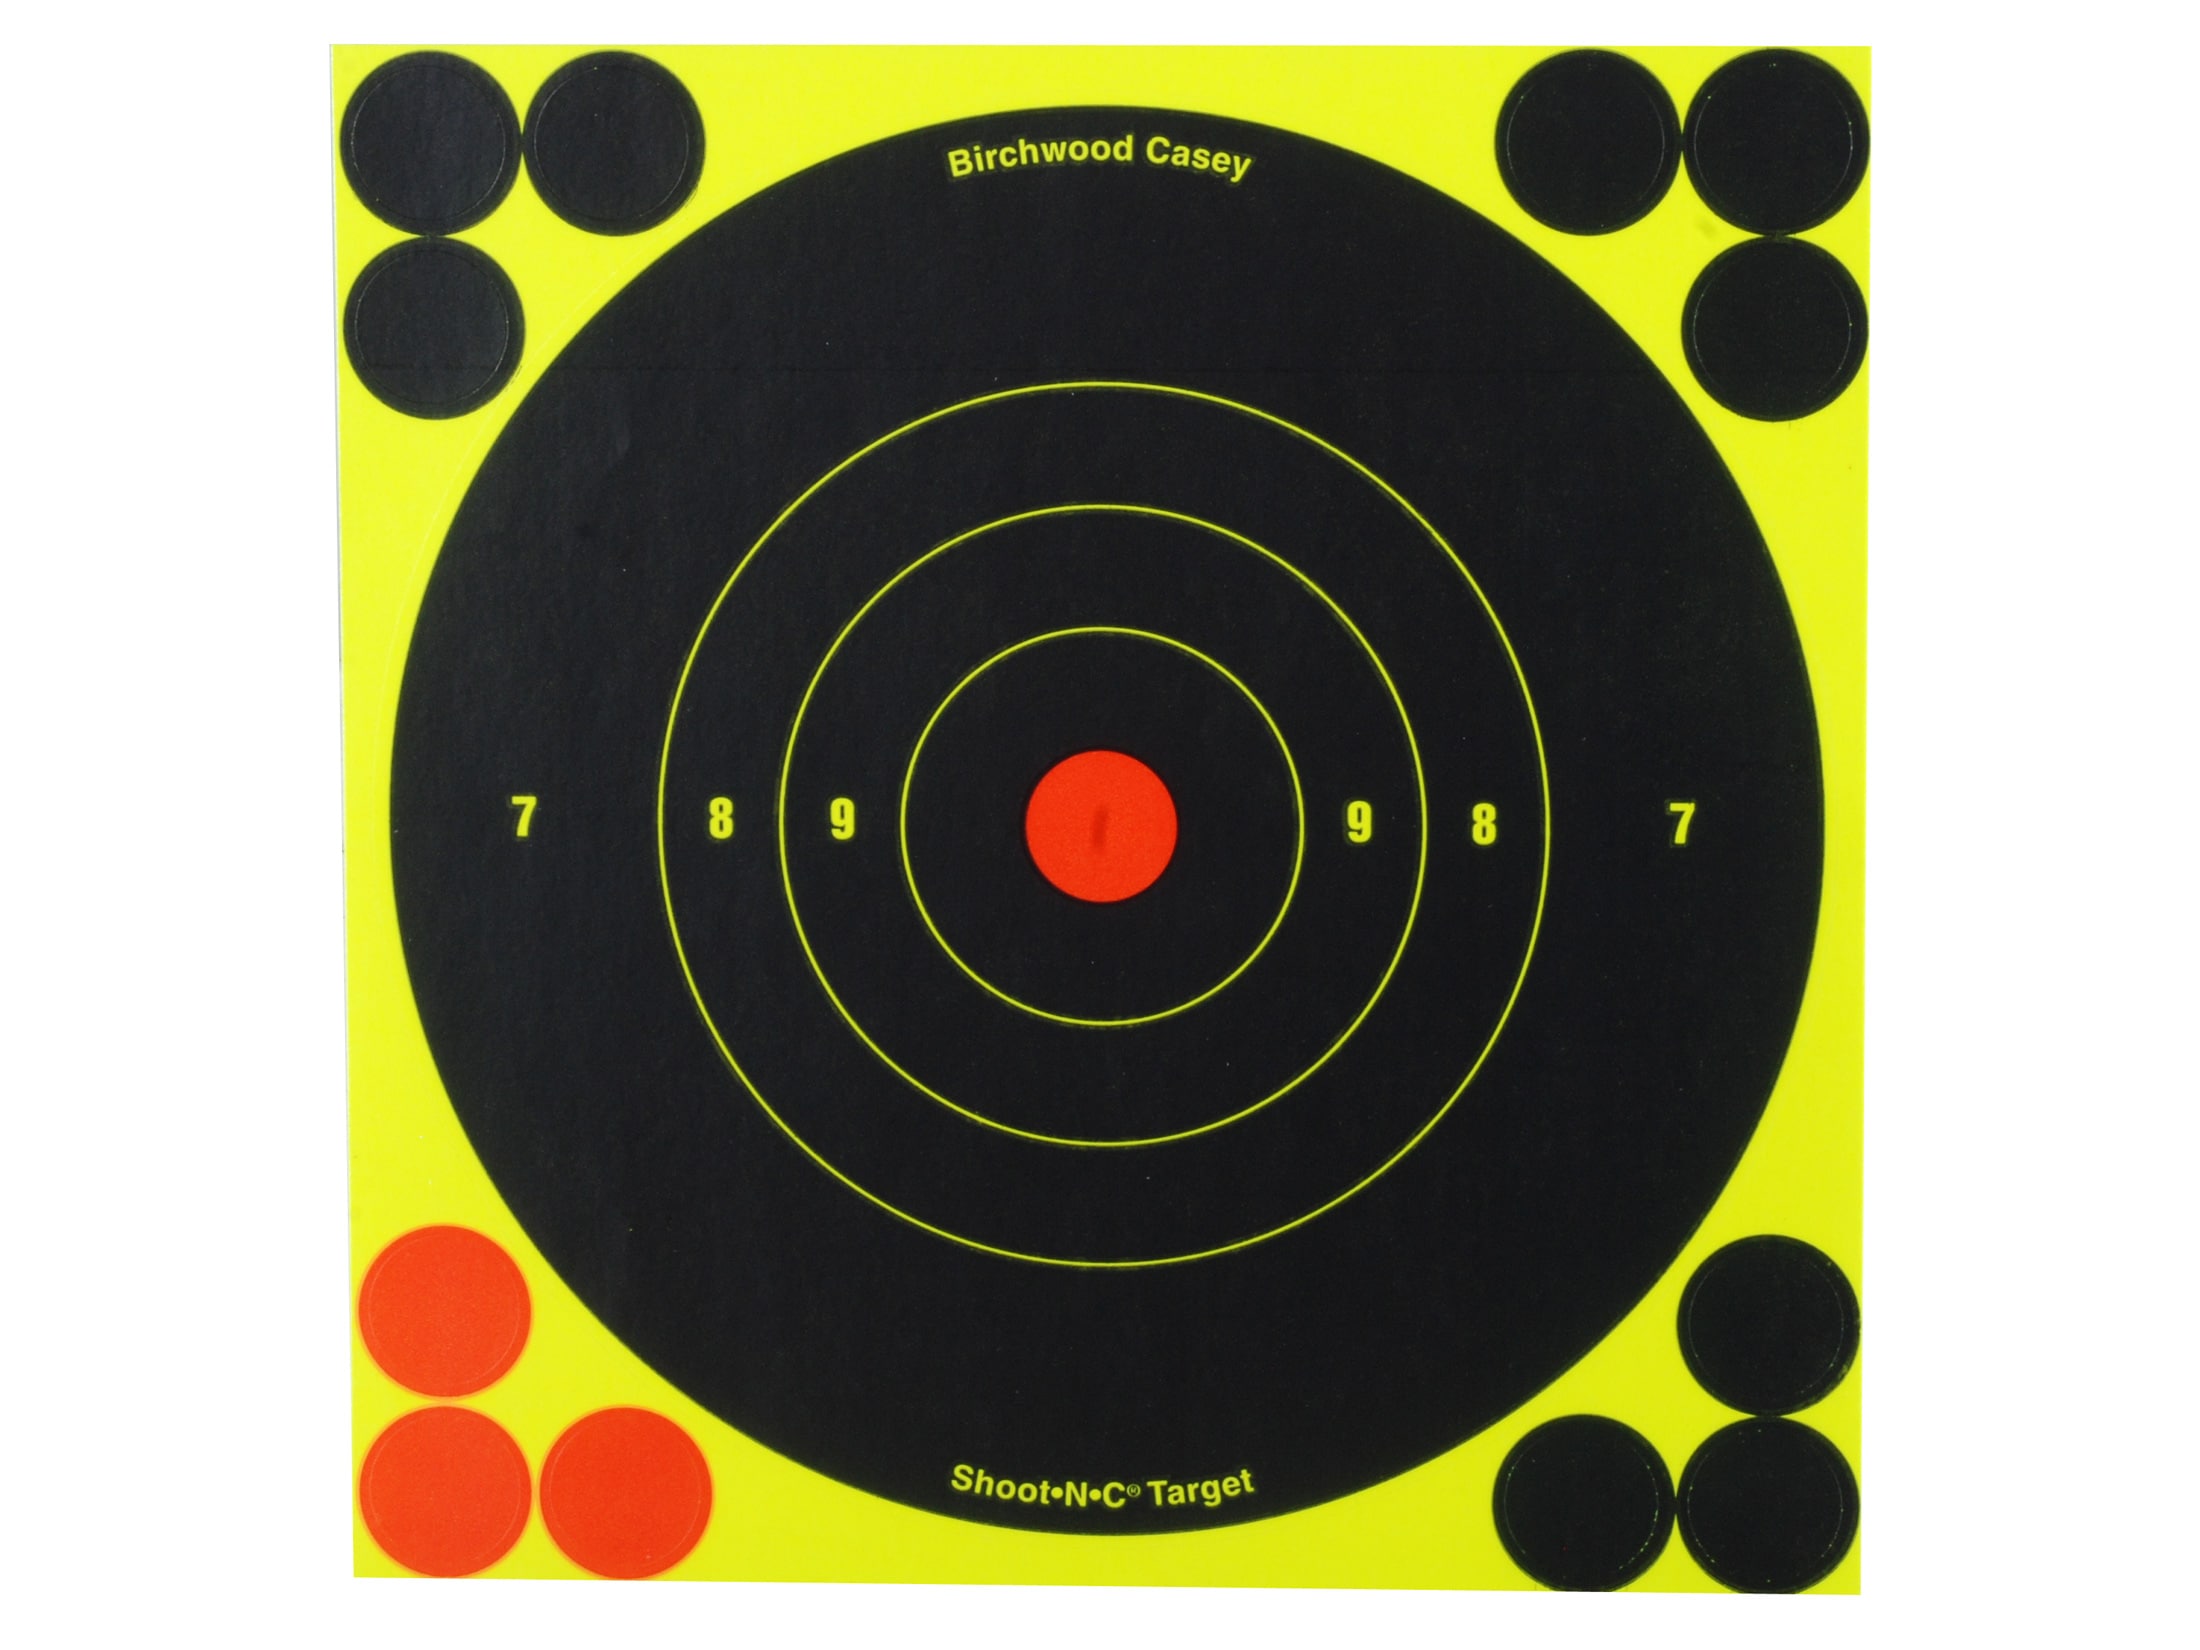 Birchwood Casey Shoot-n-c 2rd Target 108 Targets Model# 34210 for sale online 